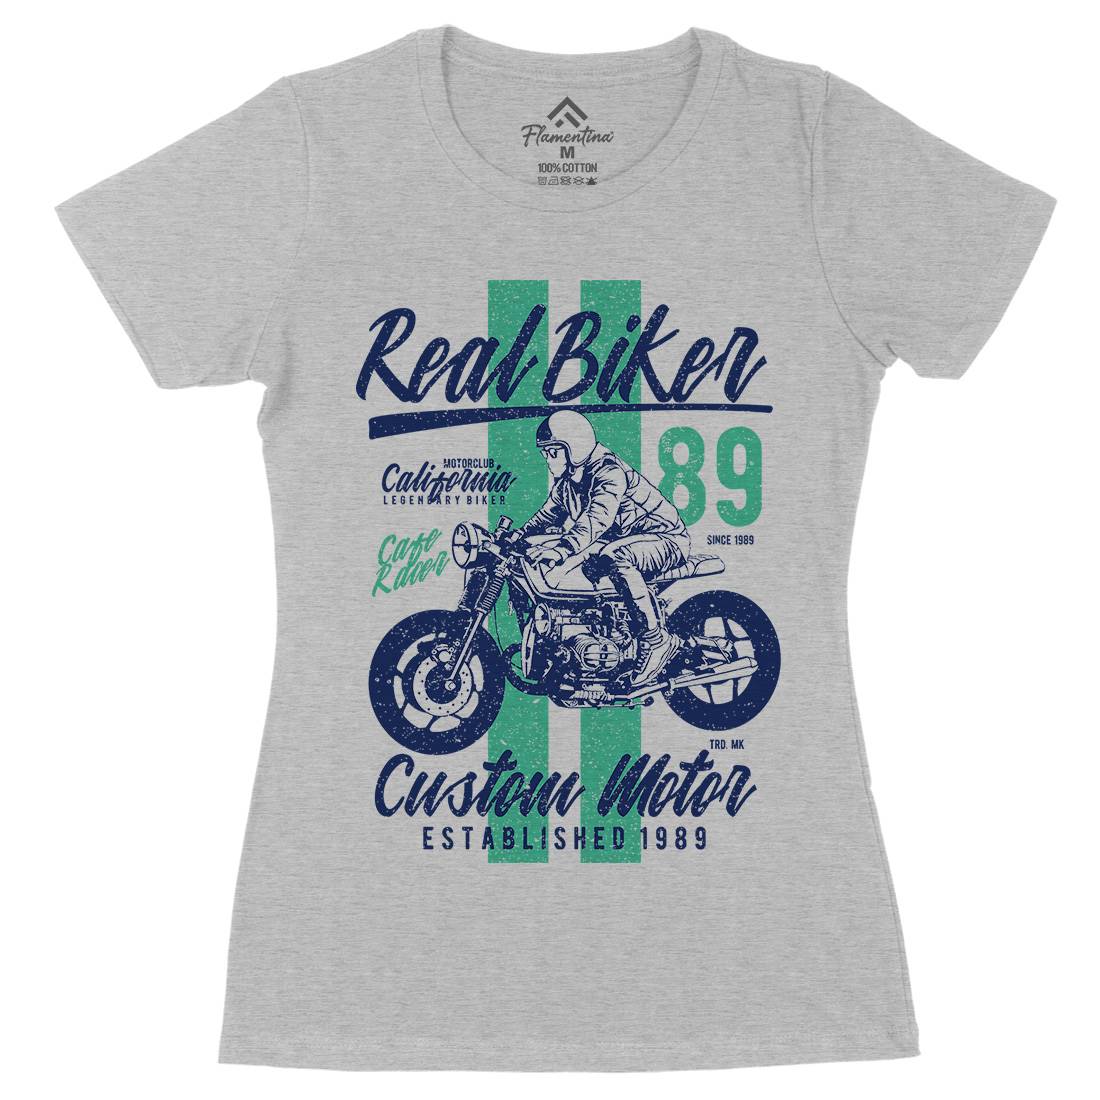 Real Biker Womens Organic Crew Neck T-Shirt Motorcycles A739